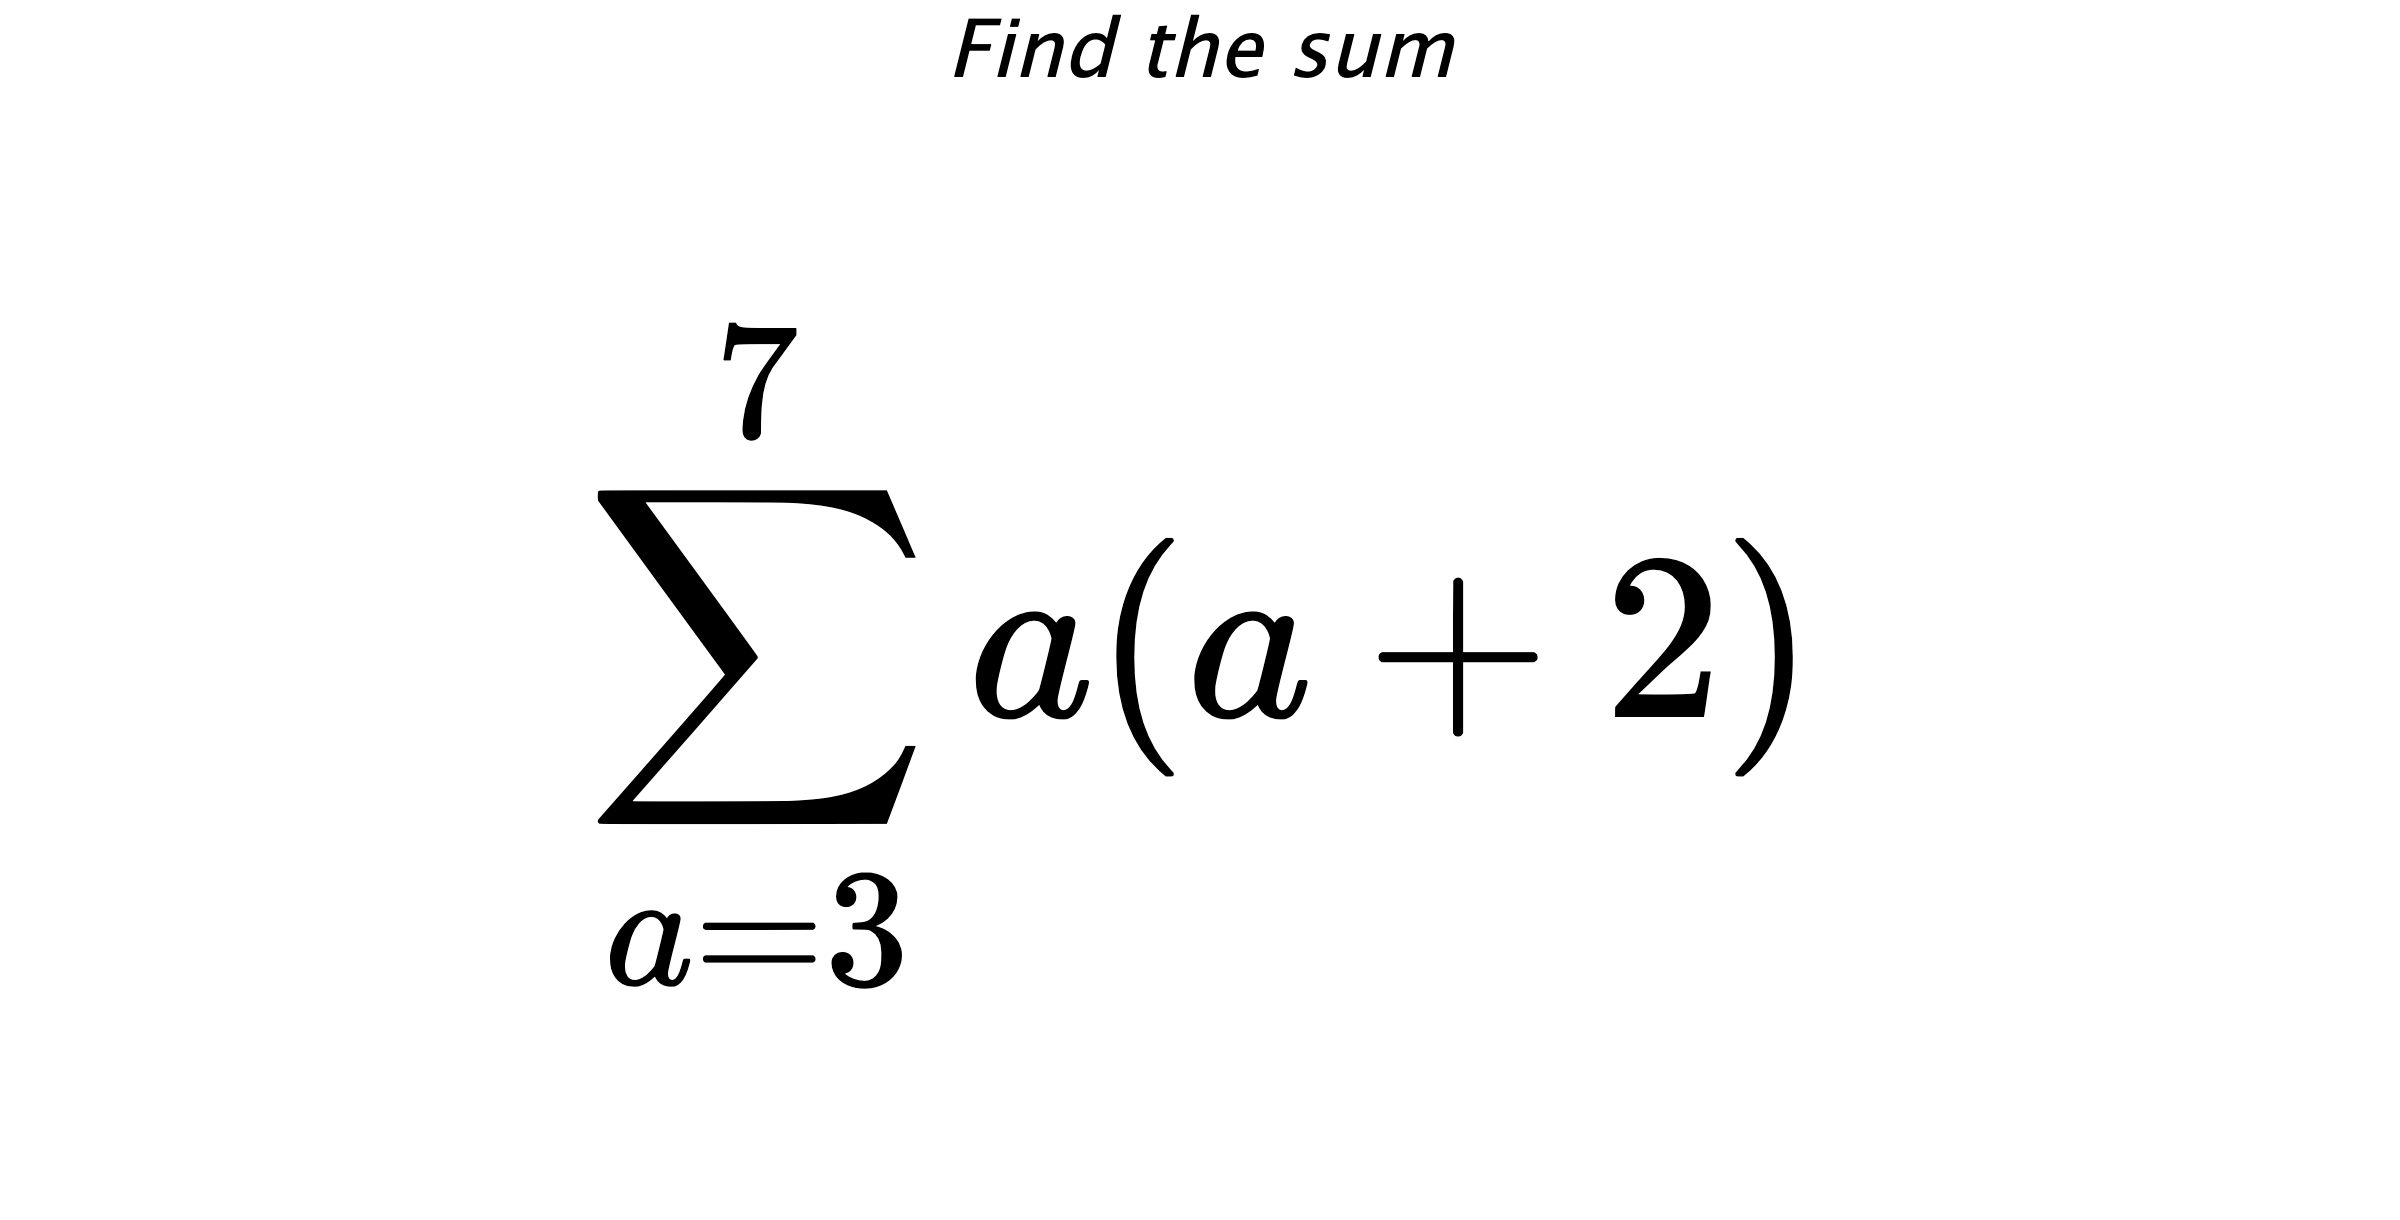 Find the sum $$ \sum_{a=3}^{7} a(a+2)$$